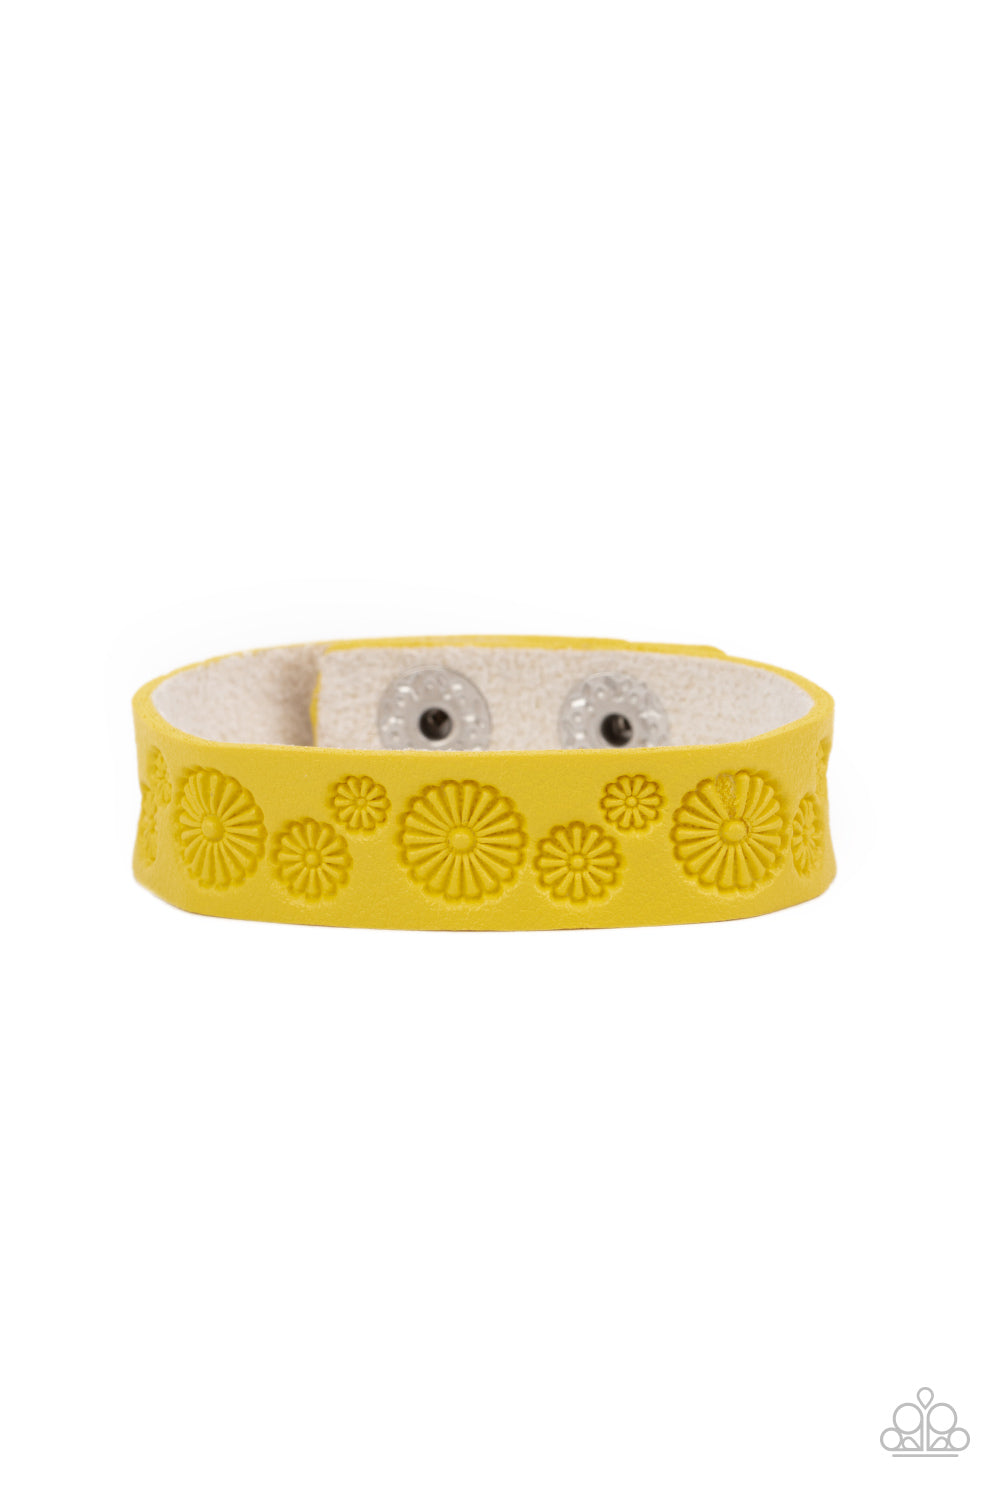 Follow The Wildflowers - Yellow Urban Bracelet - Princess Glam Shop